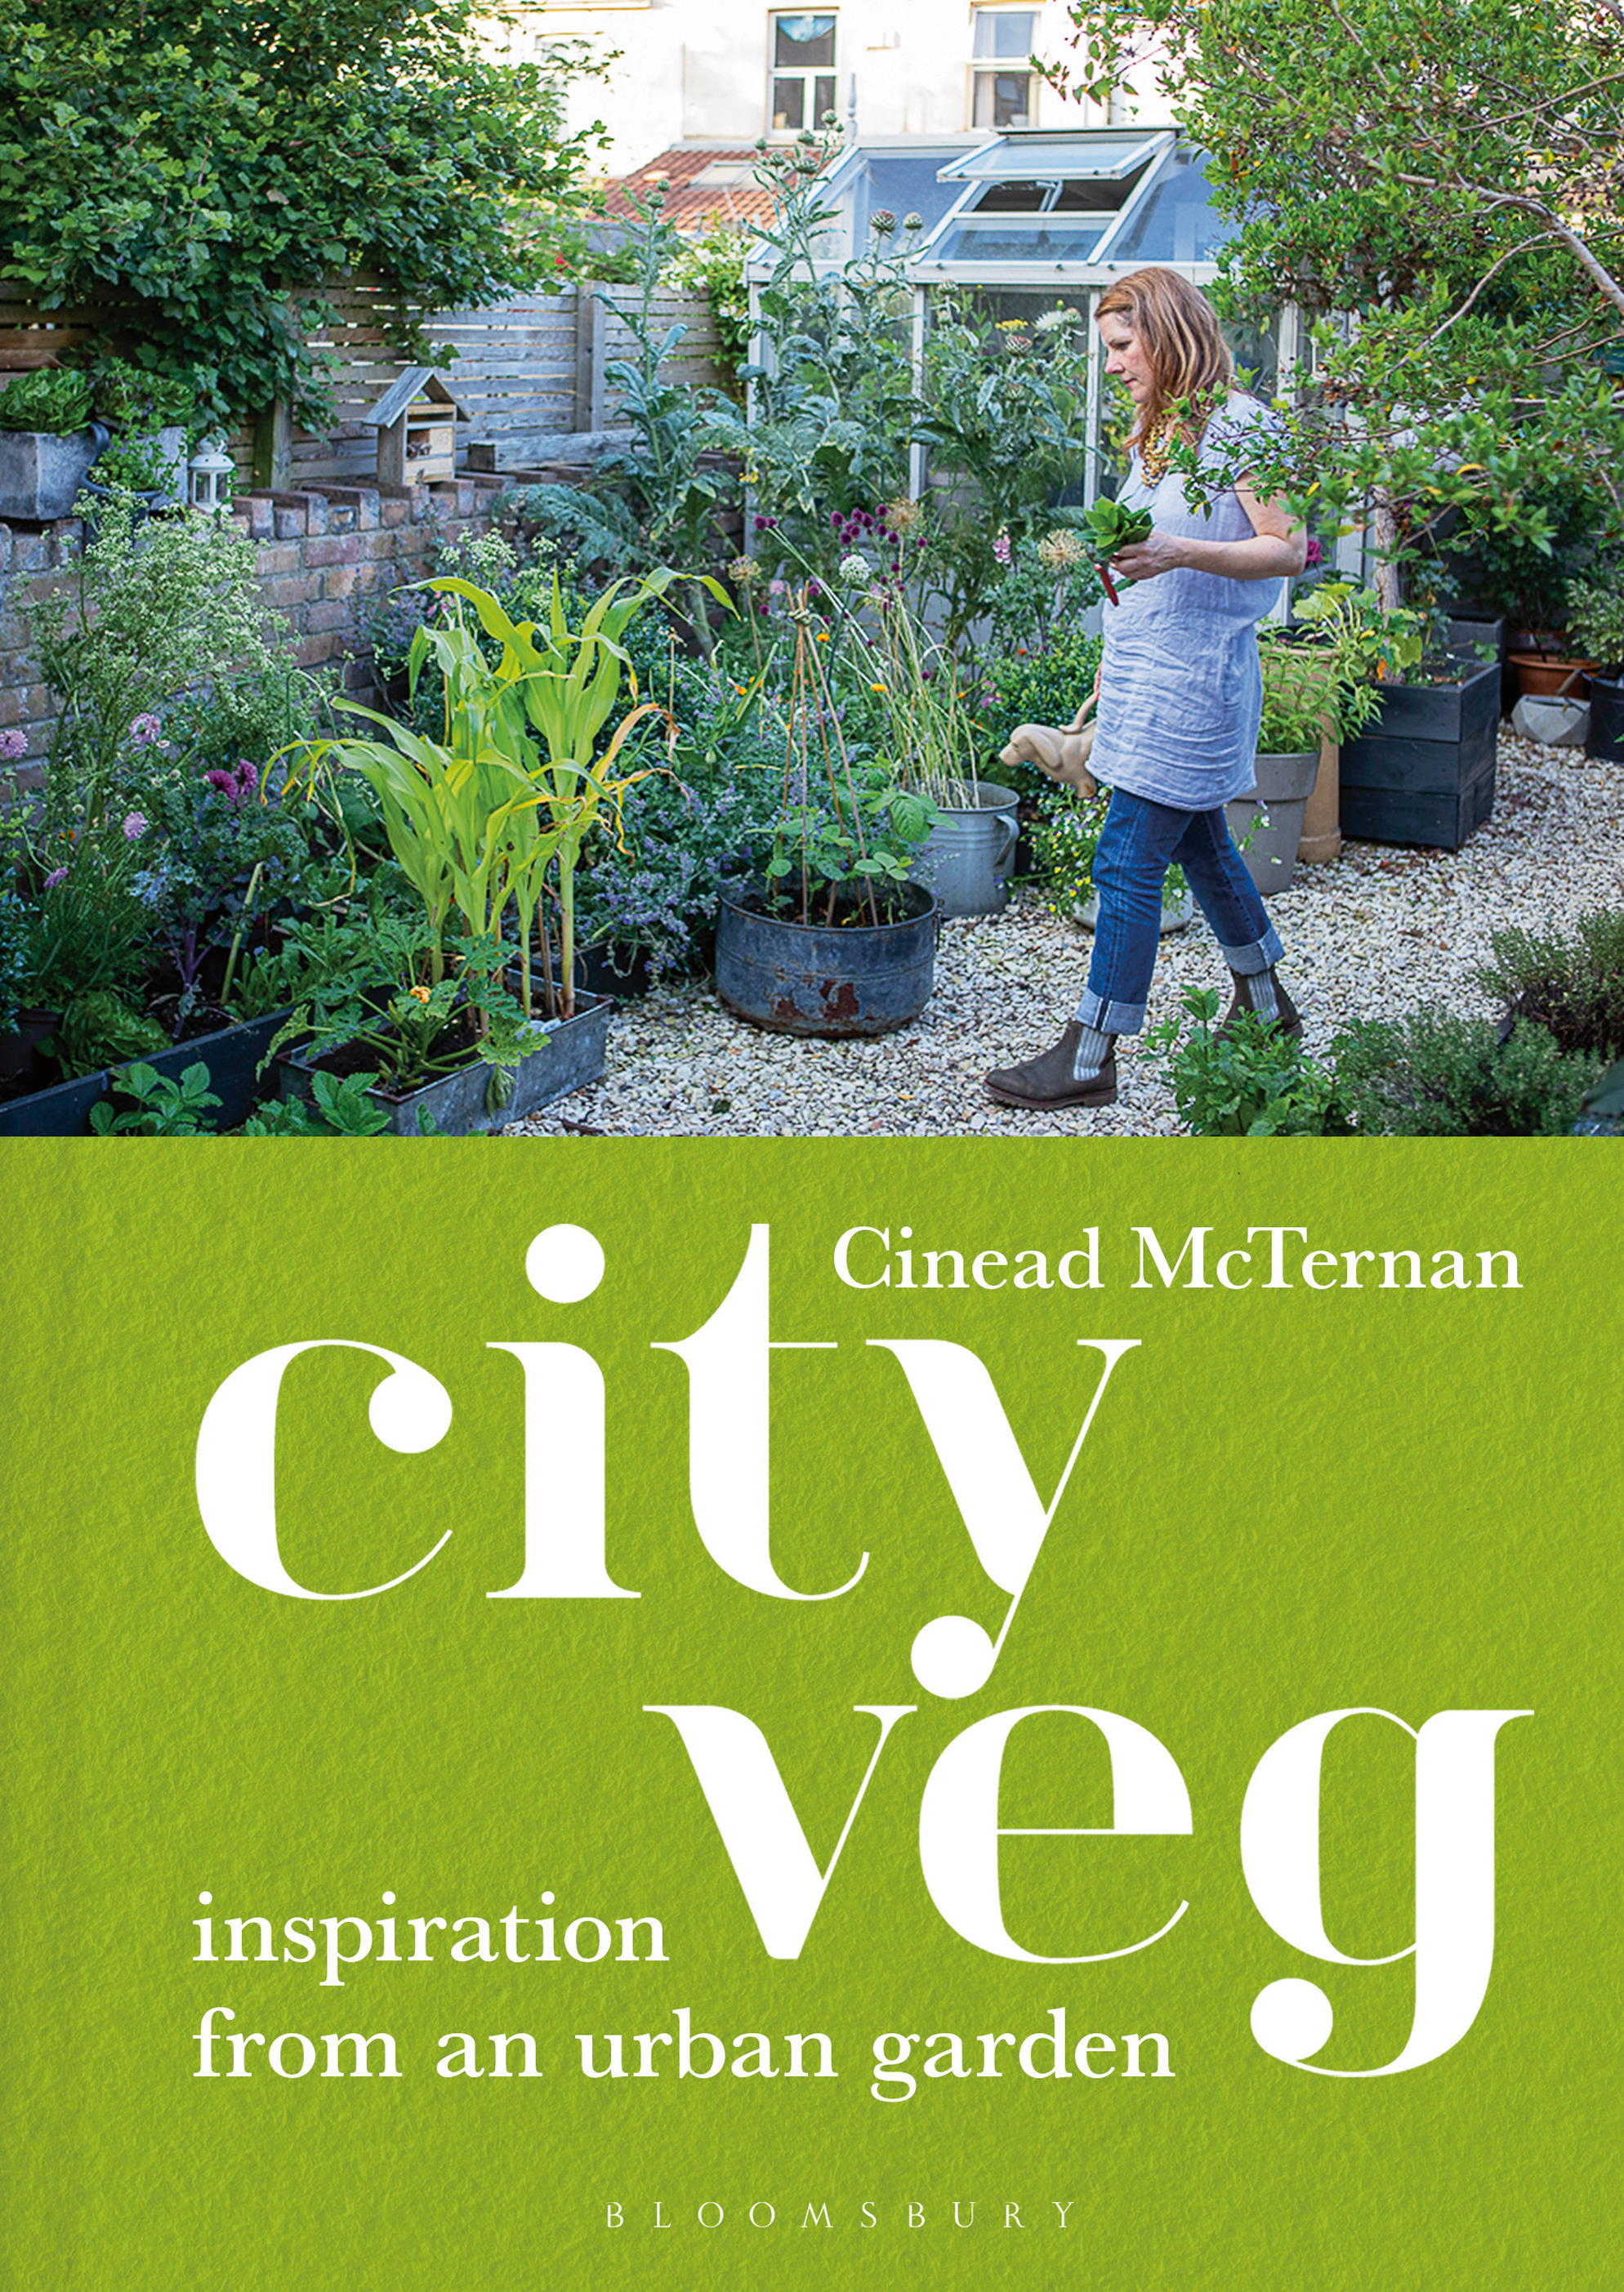 Jacket of City Veg by Cinead McTernan (Bloomsbury/PA)